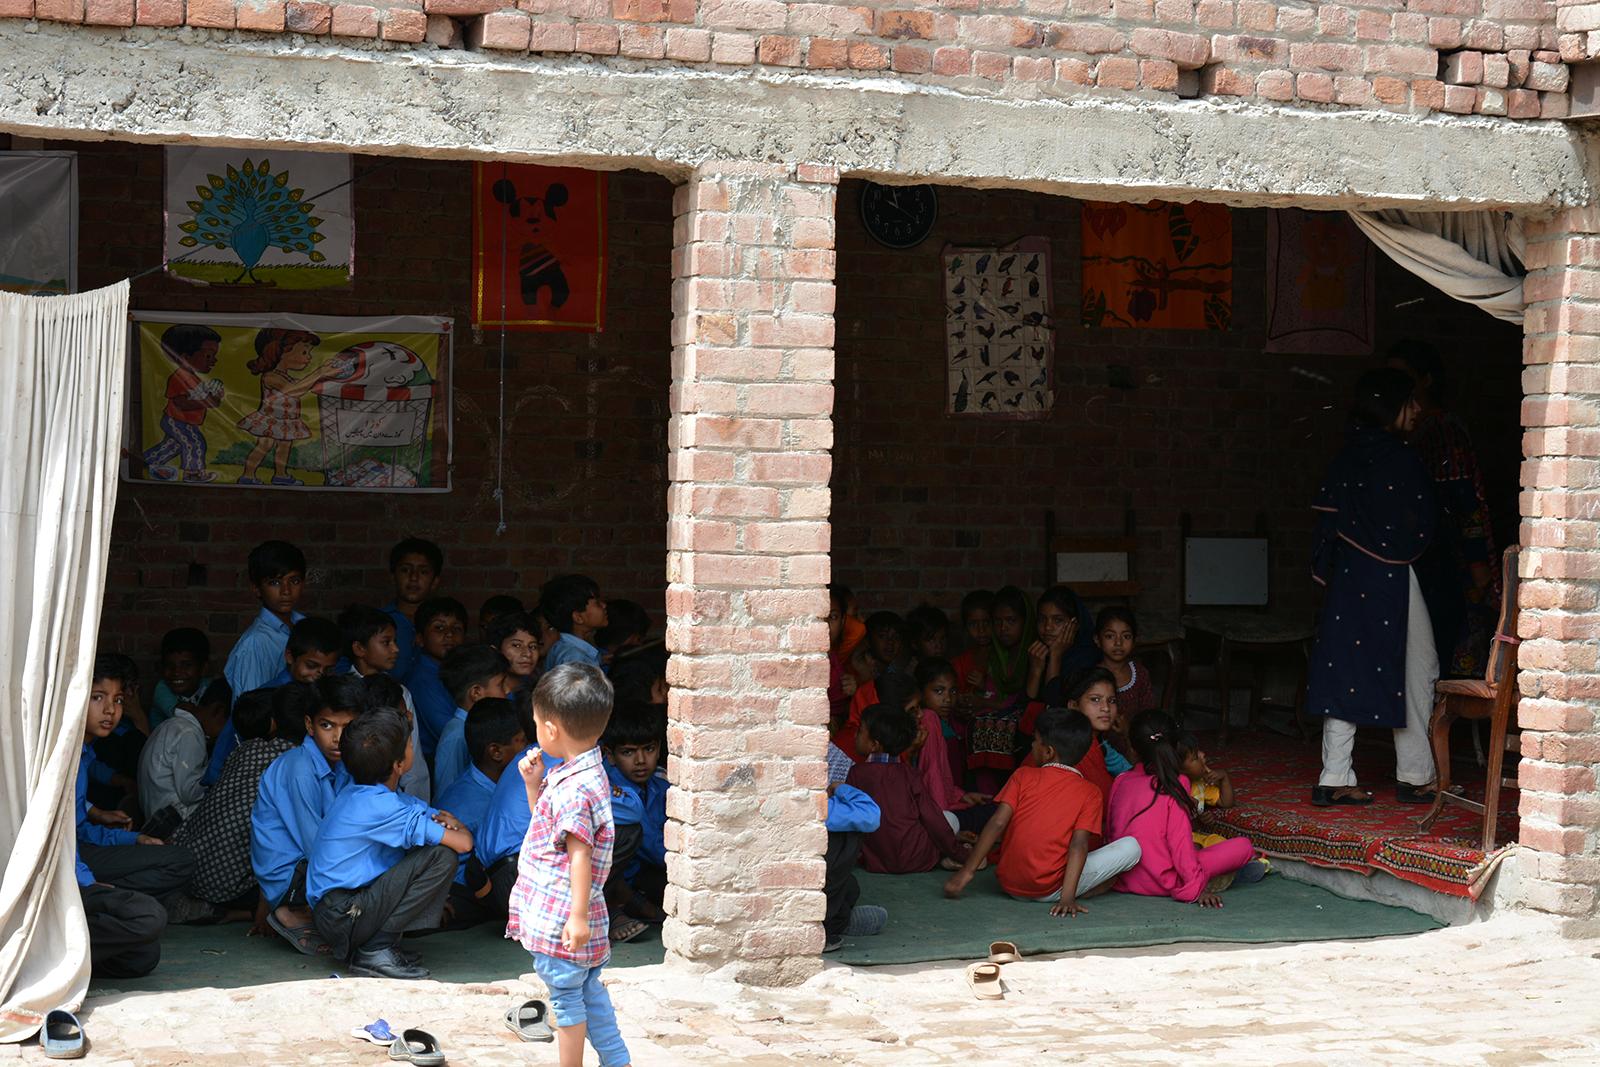 Children sitting inside a brick building